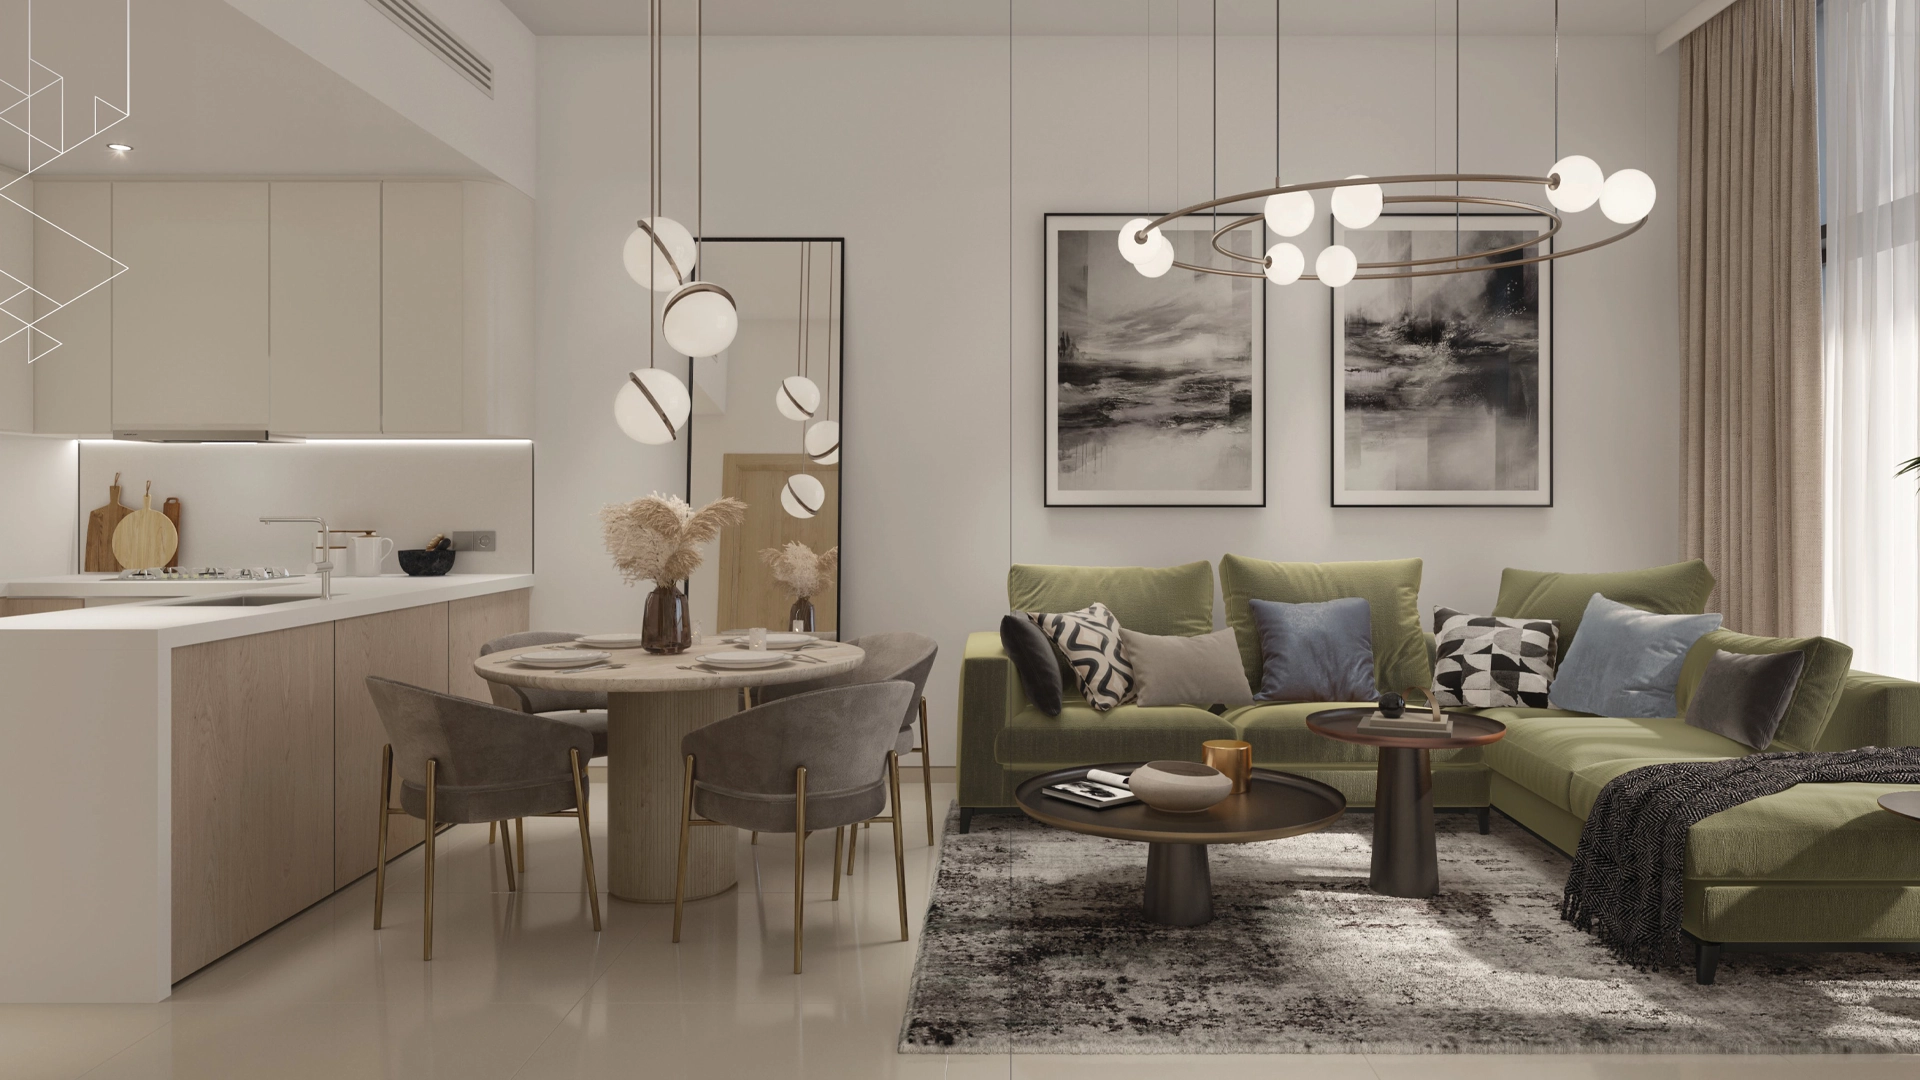 Edge-Realty-شقة بغرفة نوم واحدة للبيع في جنات بمدينة دبي للإنتاج